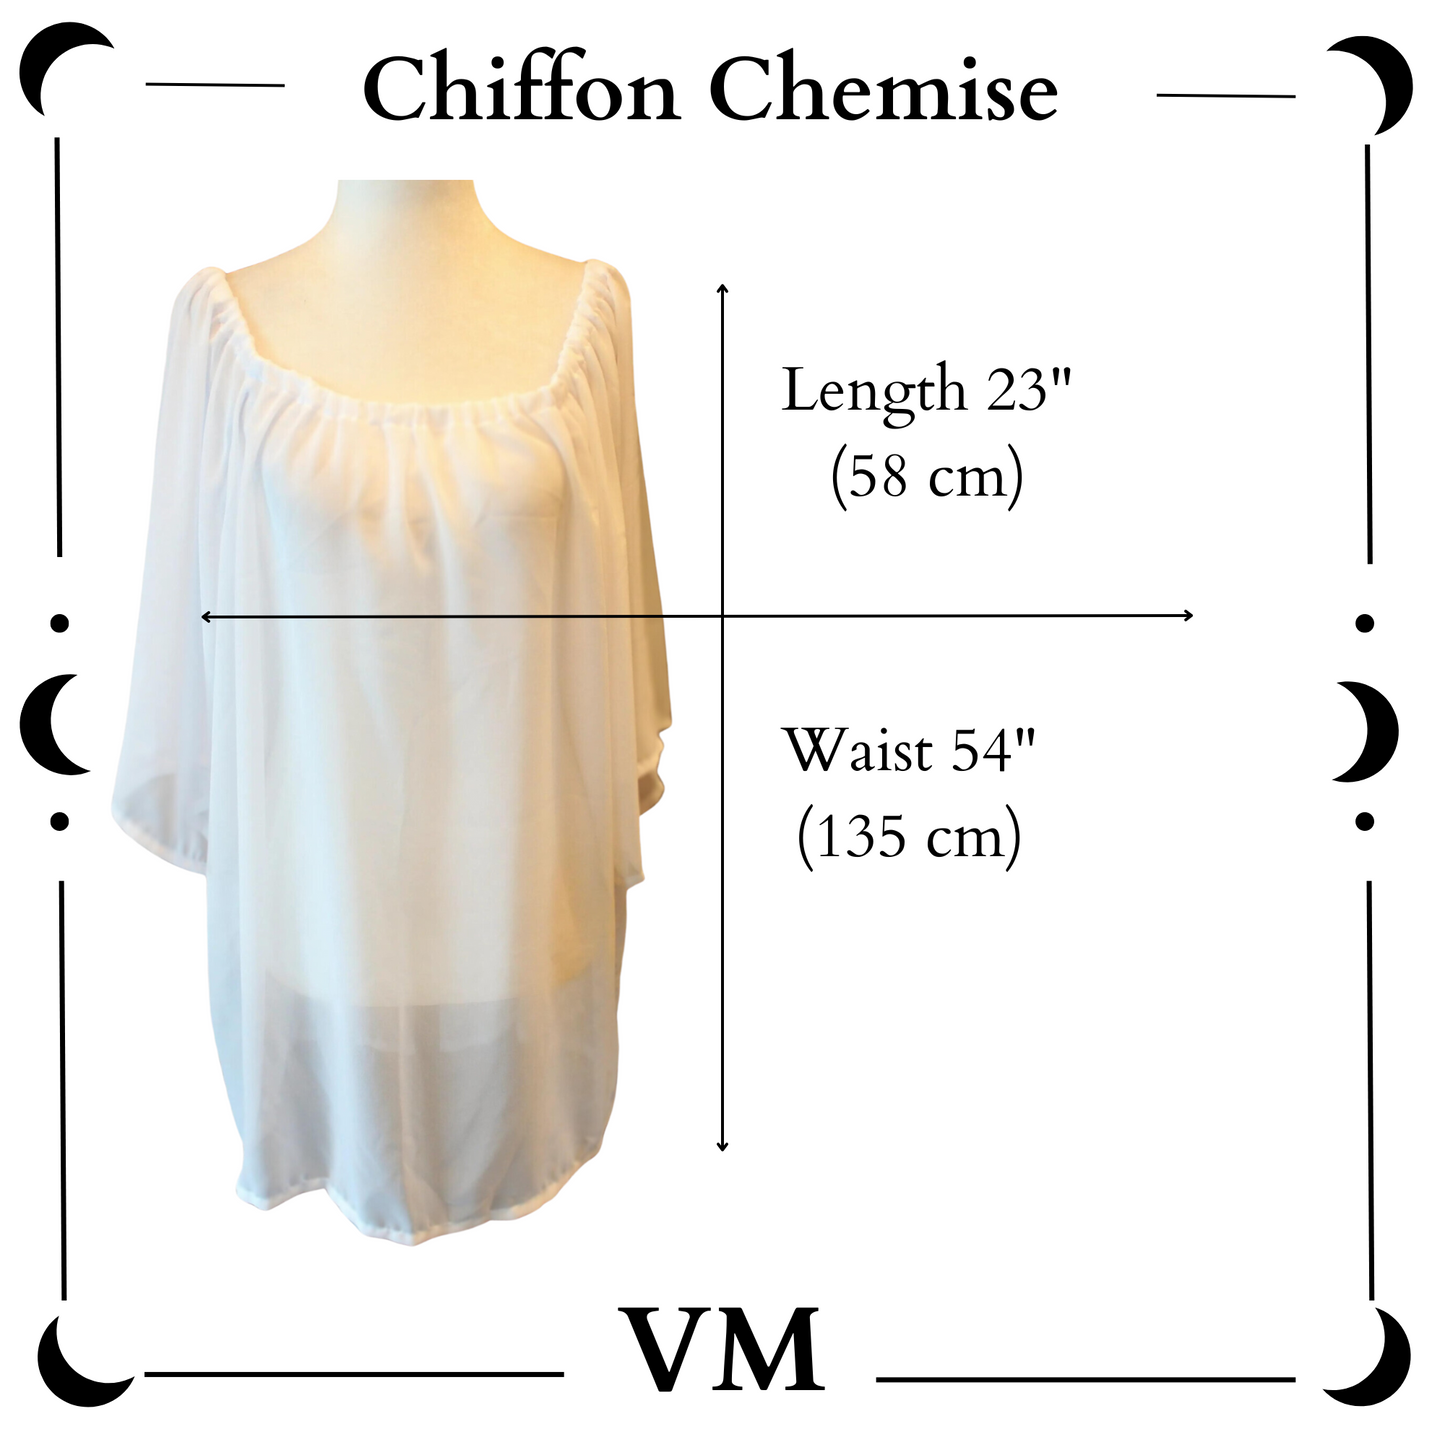 The VM Chiffon Blouse